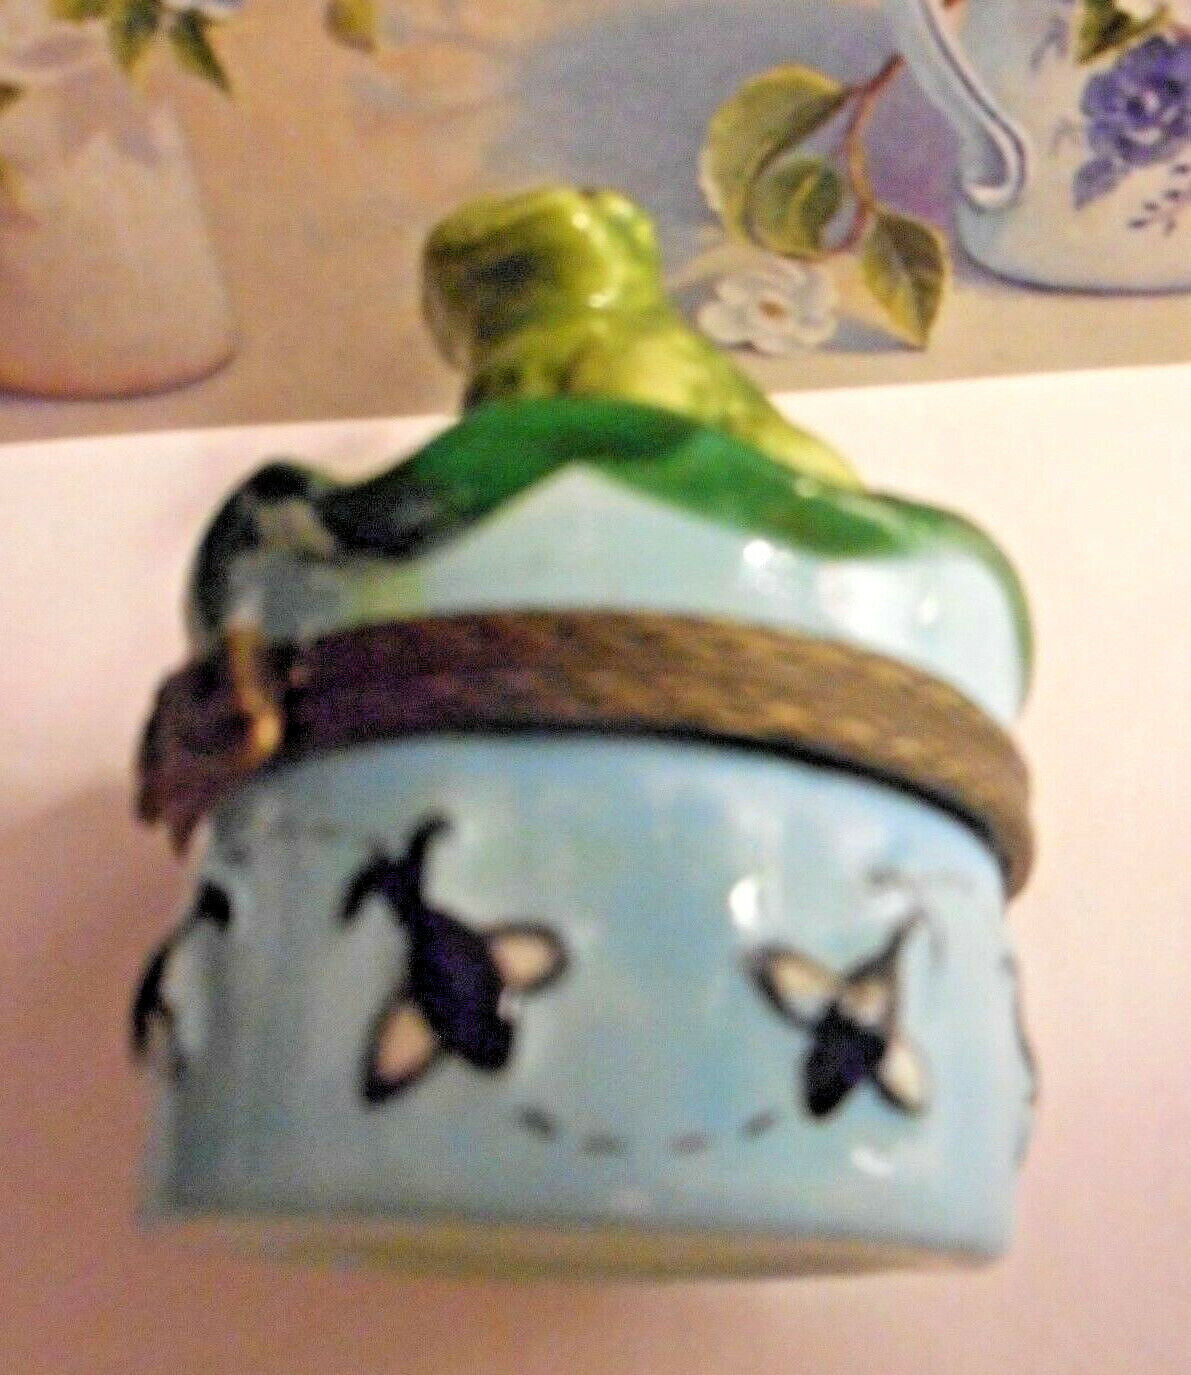 Green frog with seperate lily pad trinket box..HEAVY.. Без бренда - фотография #8